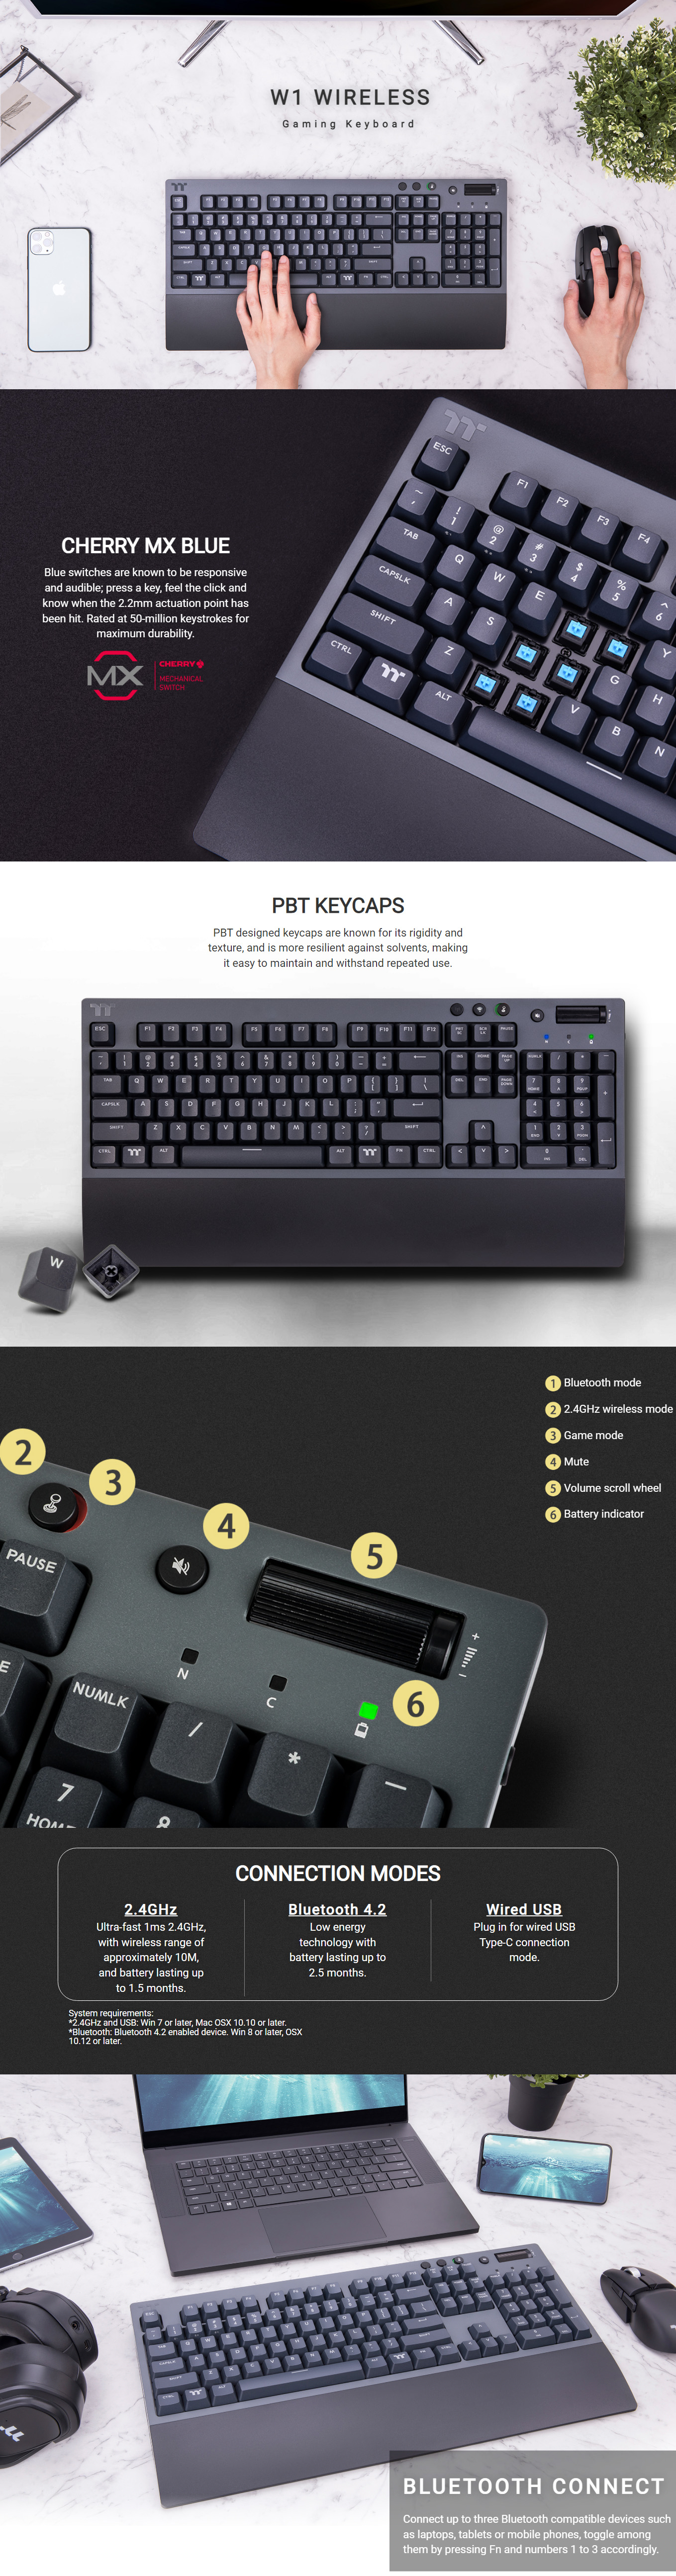 Keyboards-Thermaltake-W1-Wireless-Gaming-Keyboard-Cherry-MX-Blue-1